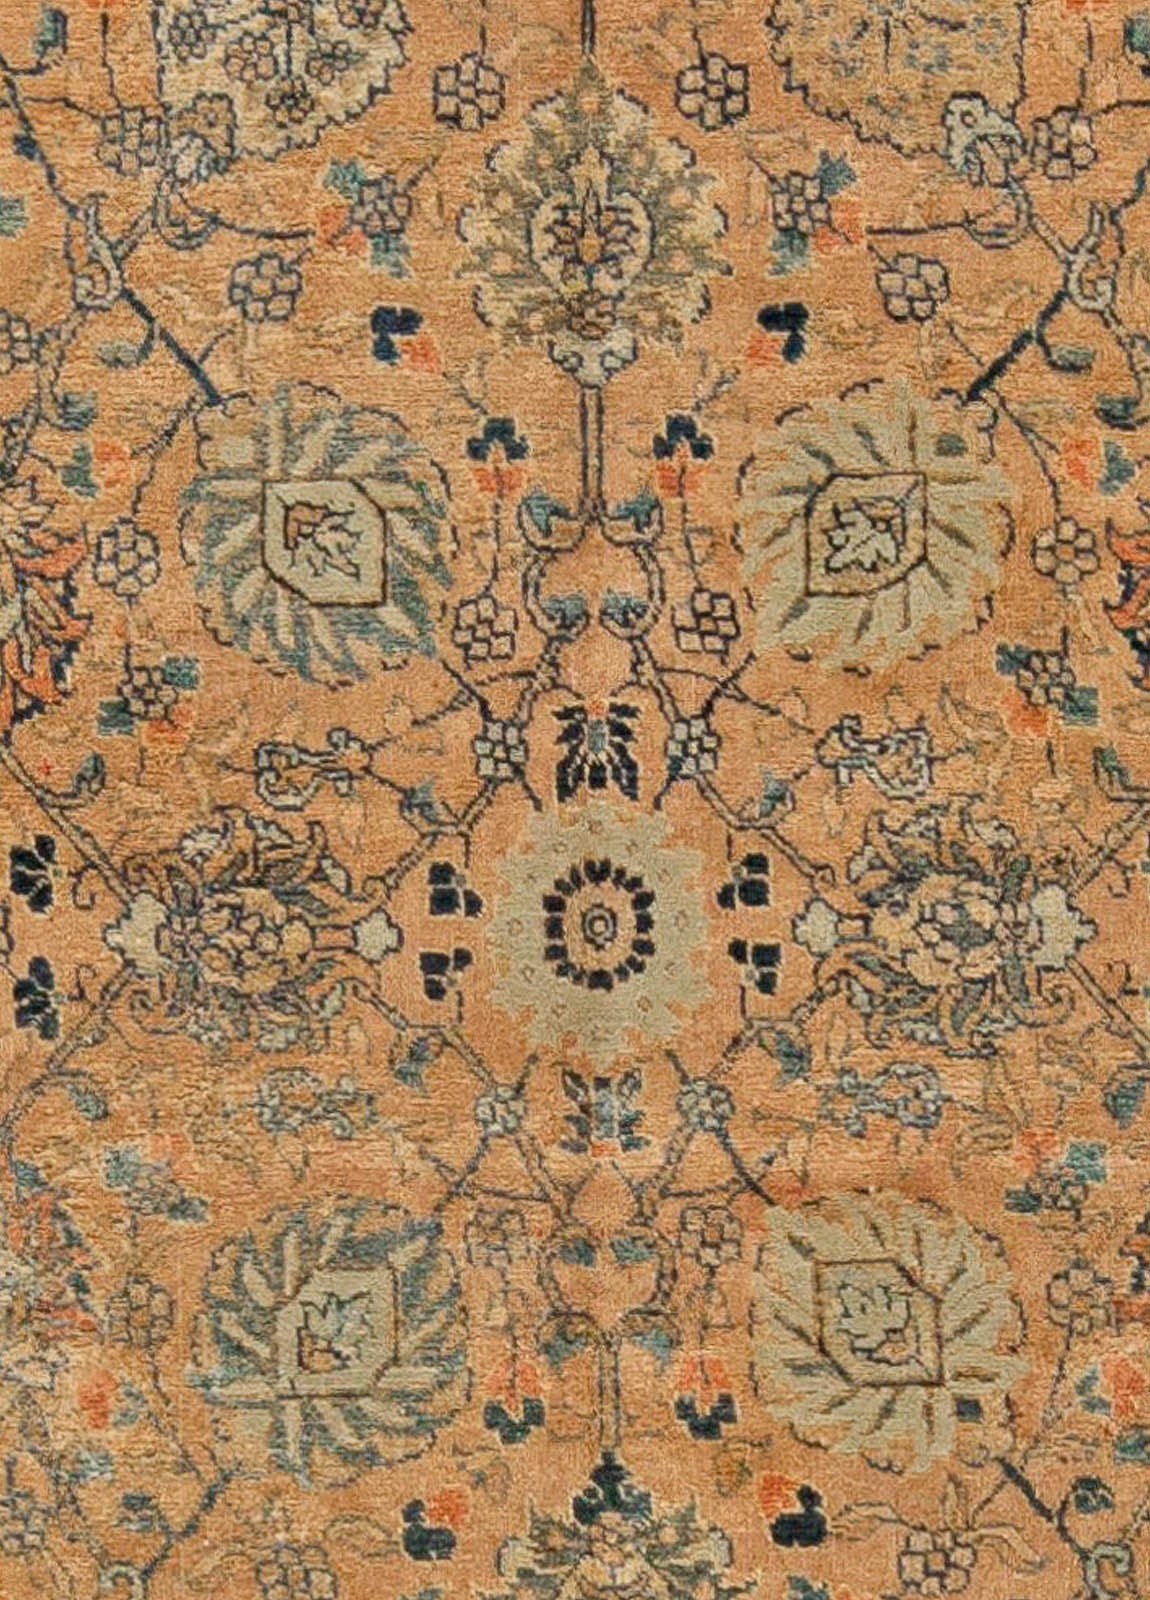 Antique Persian Tabriz handwoven wool rug
Size: 7'0